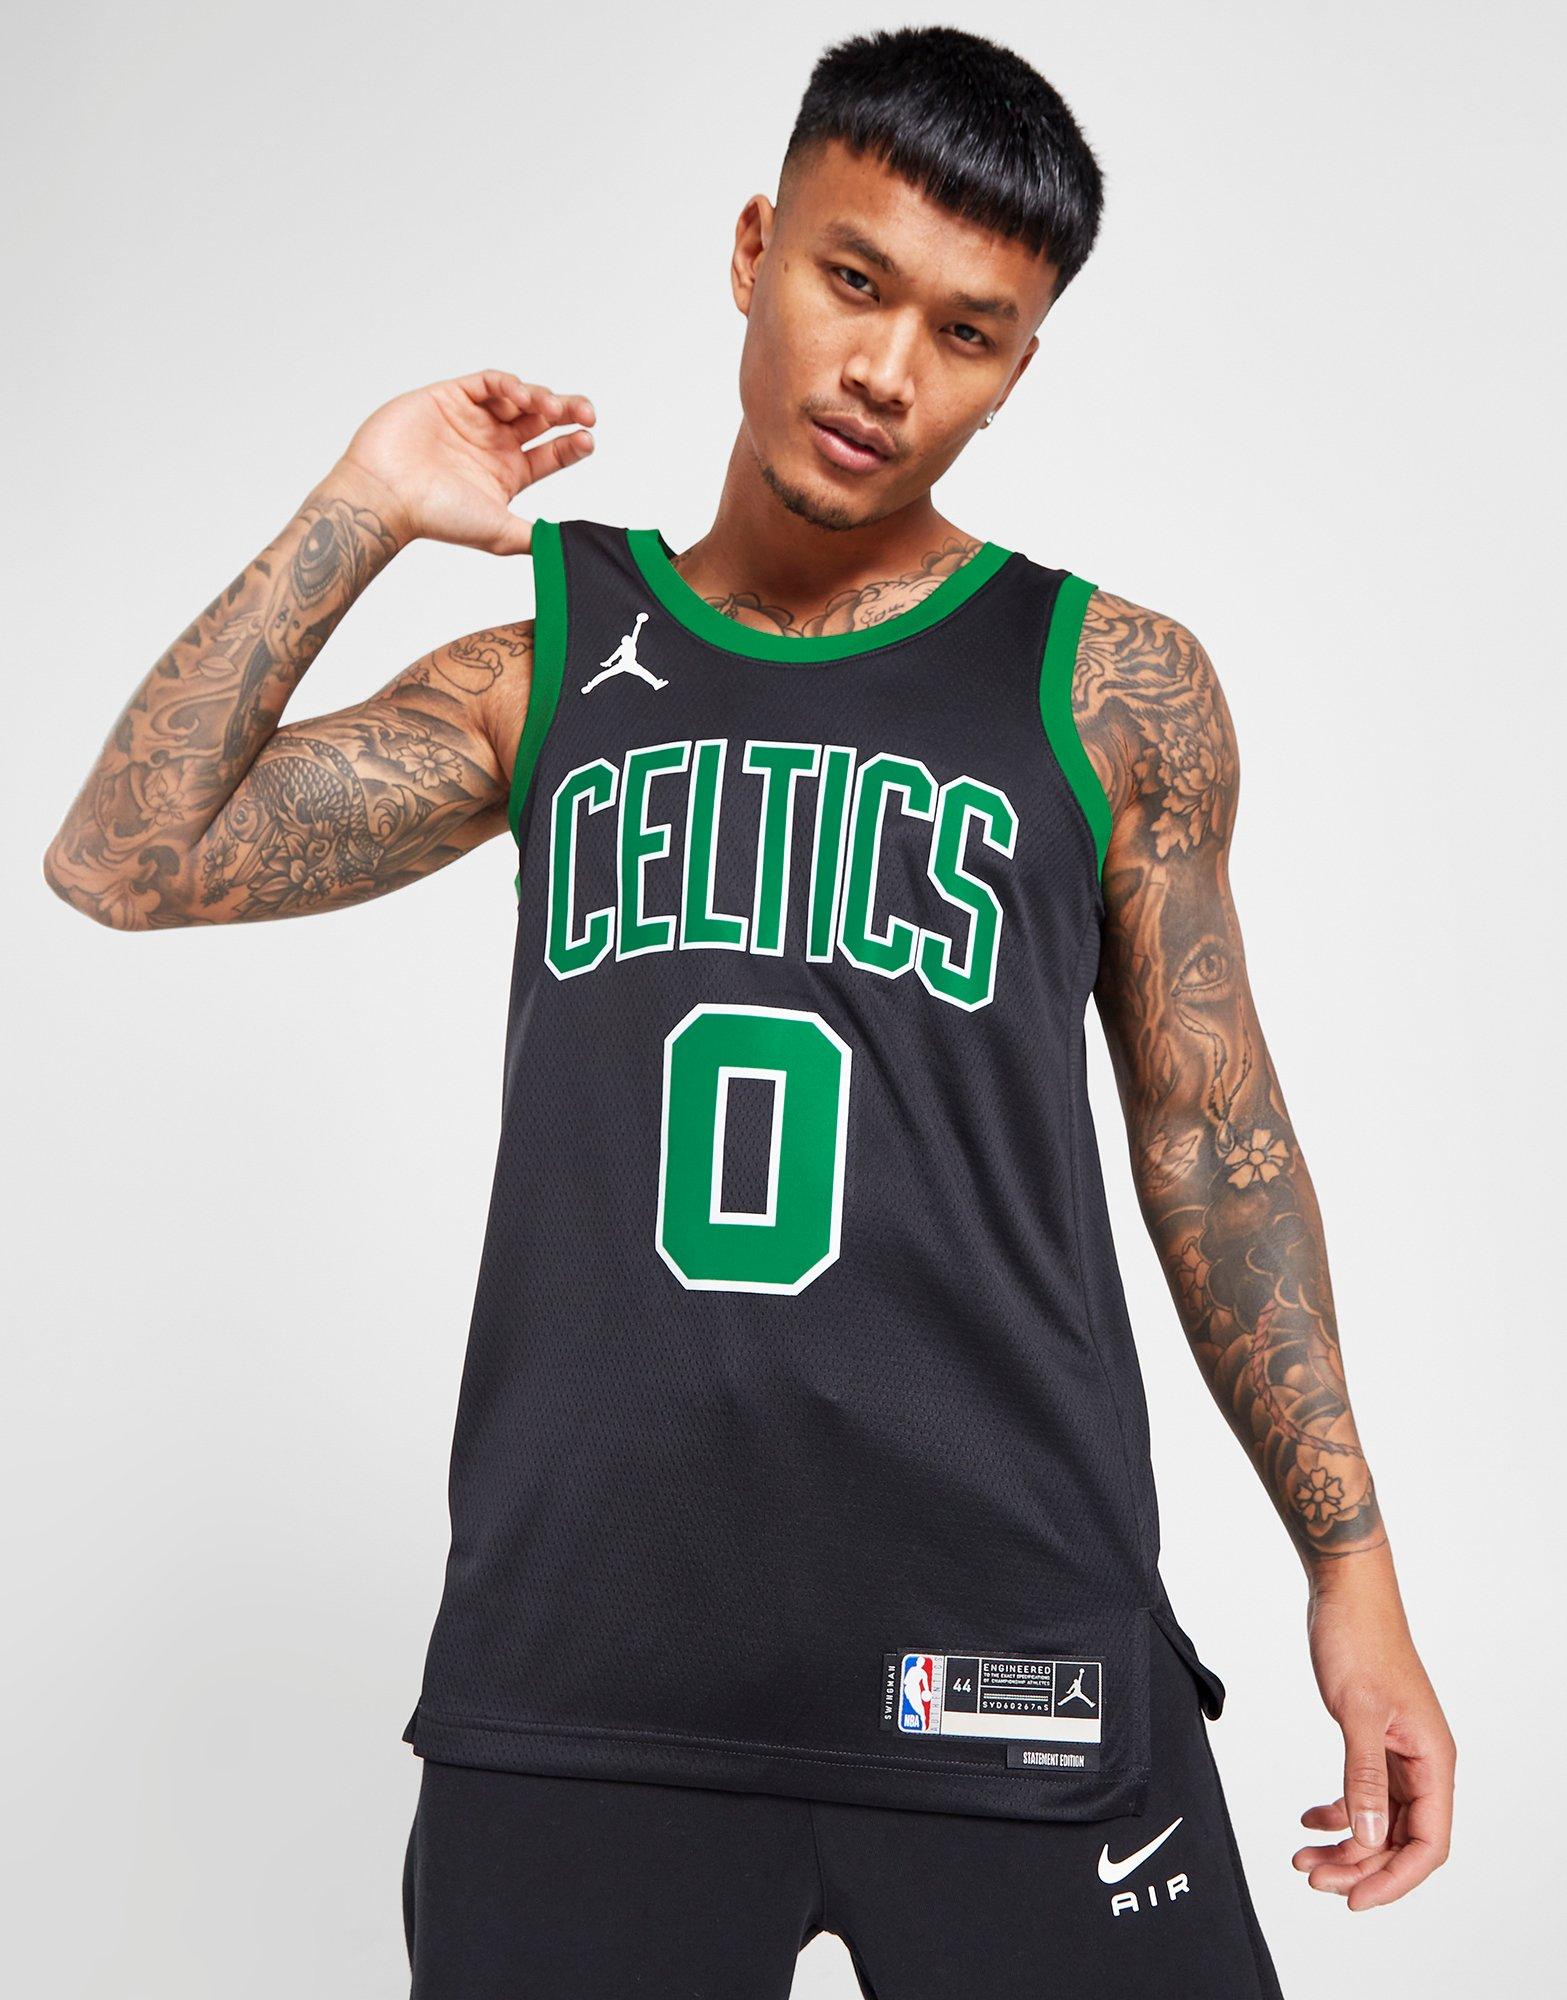 Home Page - LG Celtics